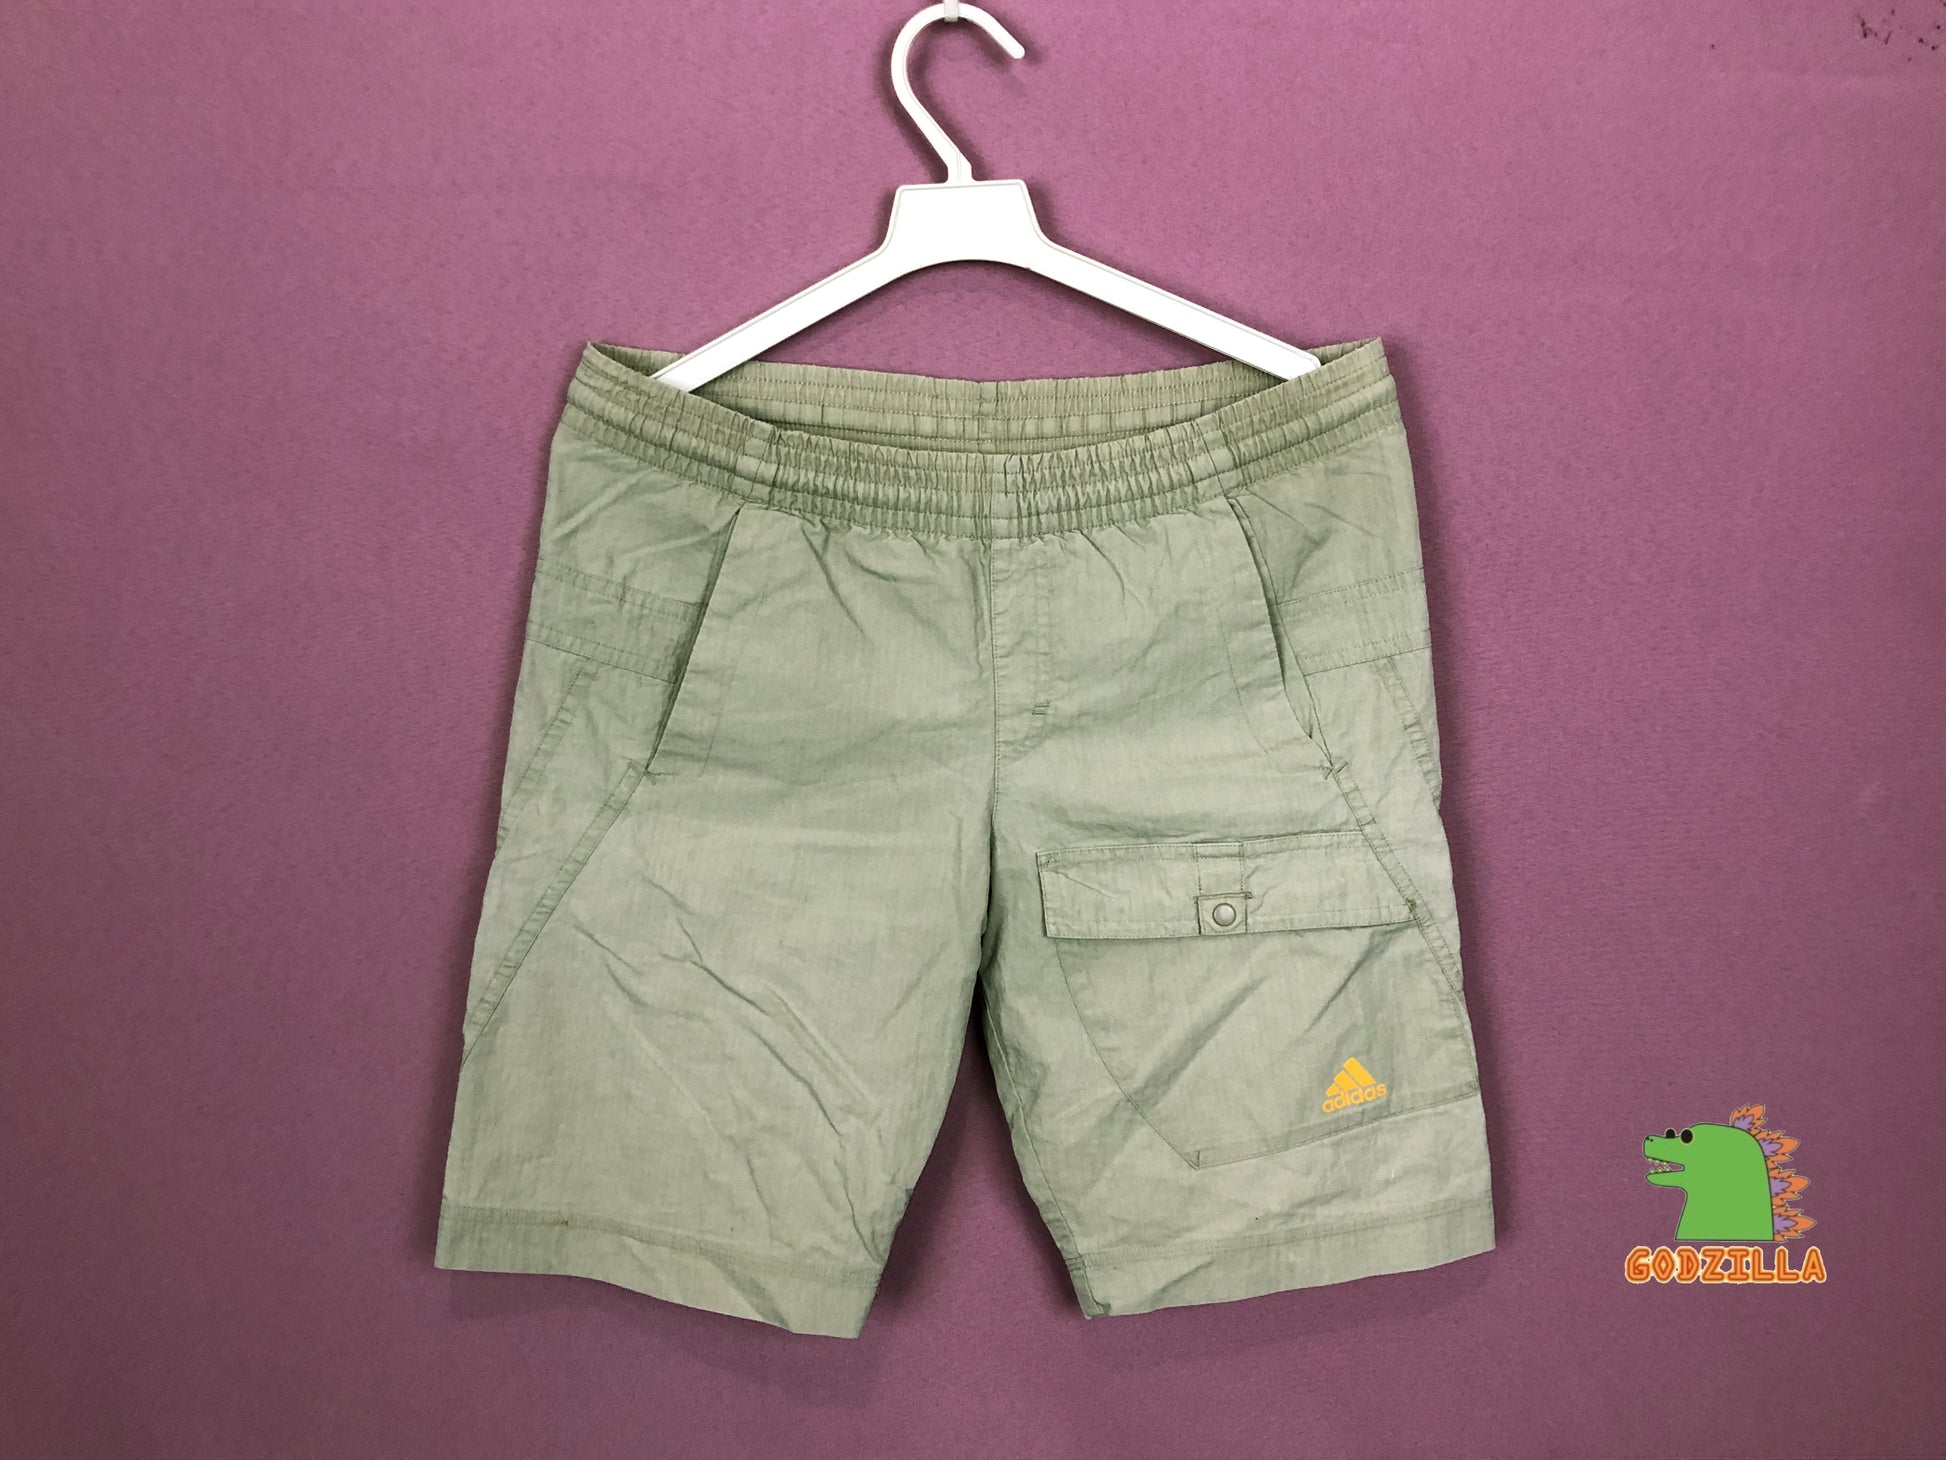 Adidas Vintage Men's Kids Cargo Shorts - 11-12Y Gray Cotton Blend